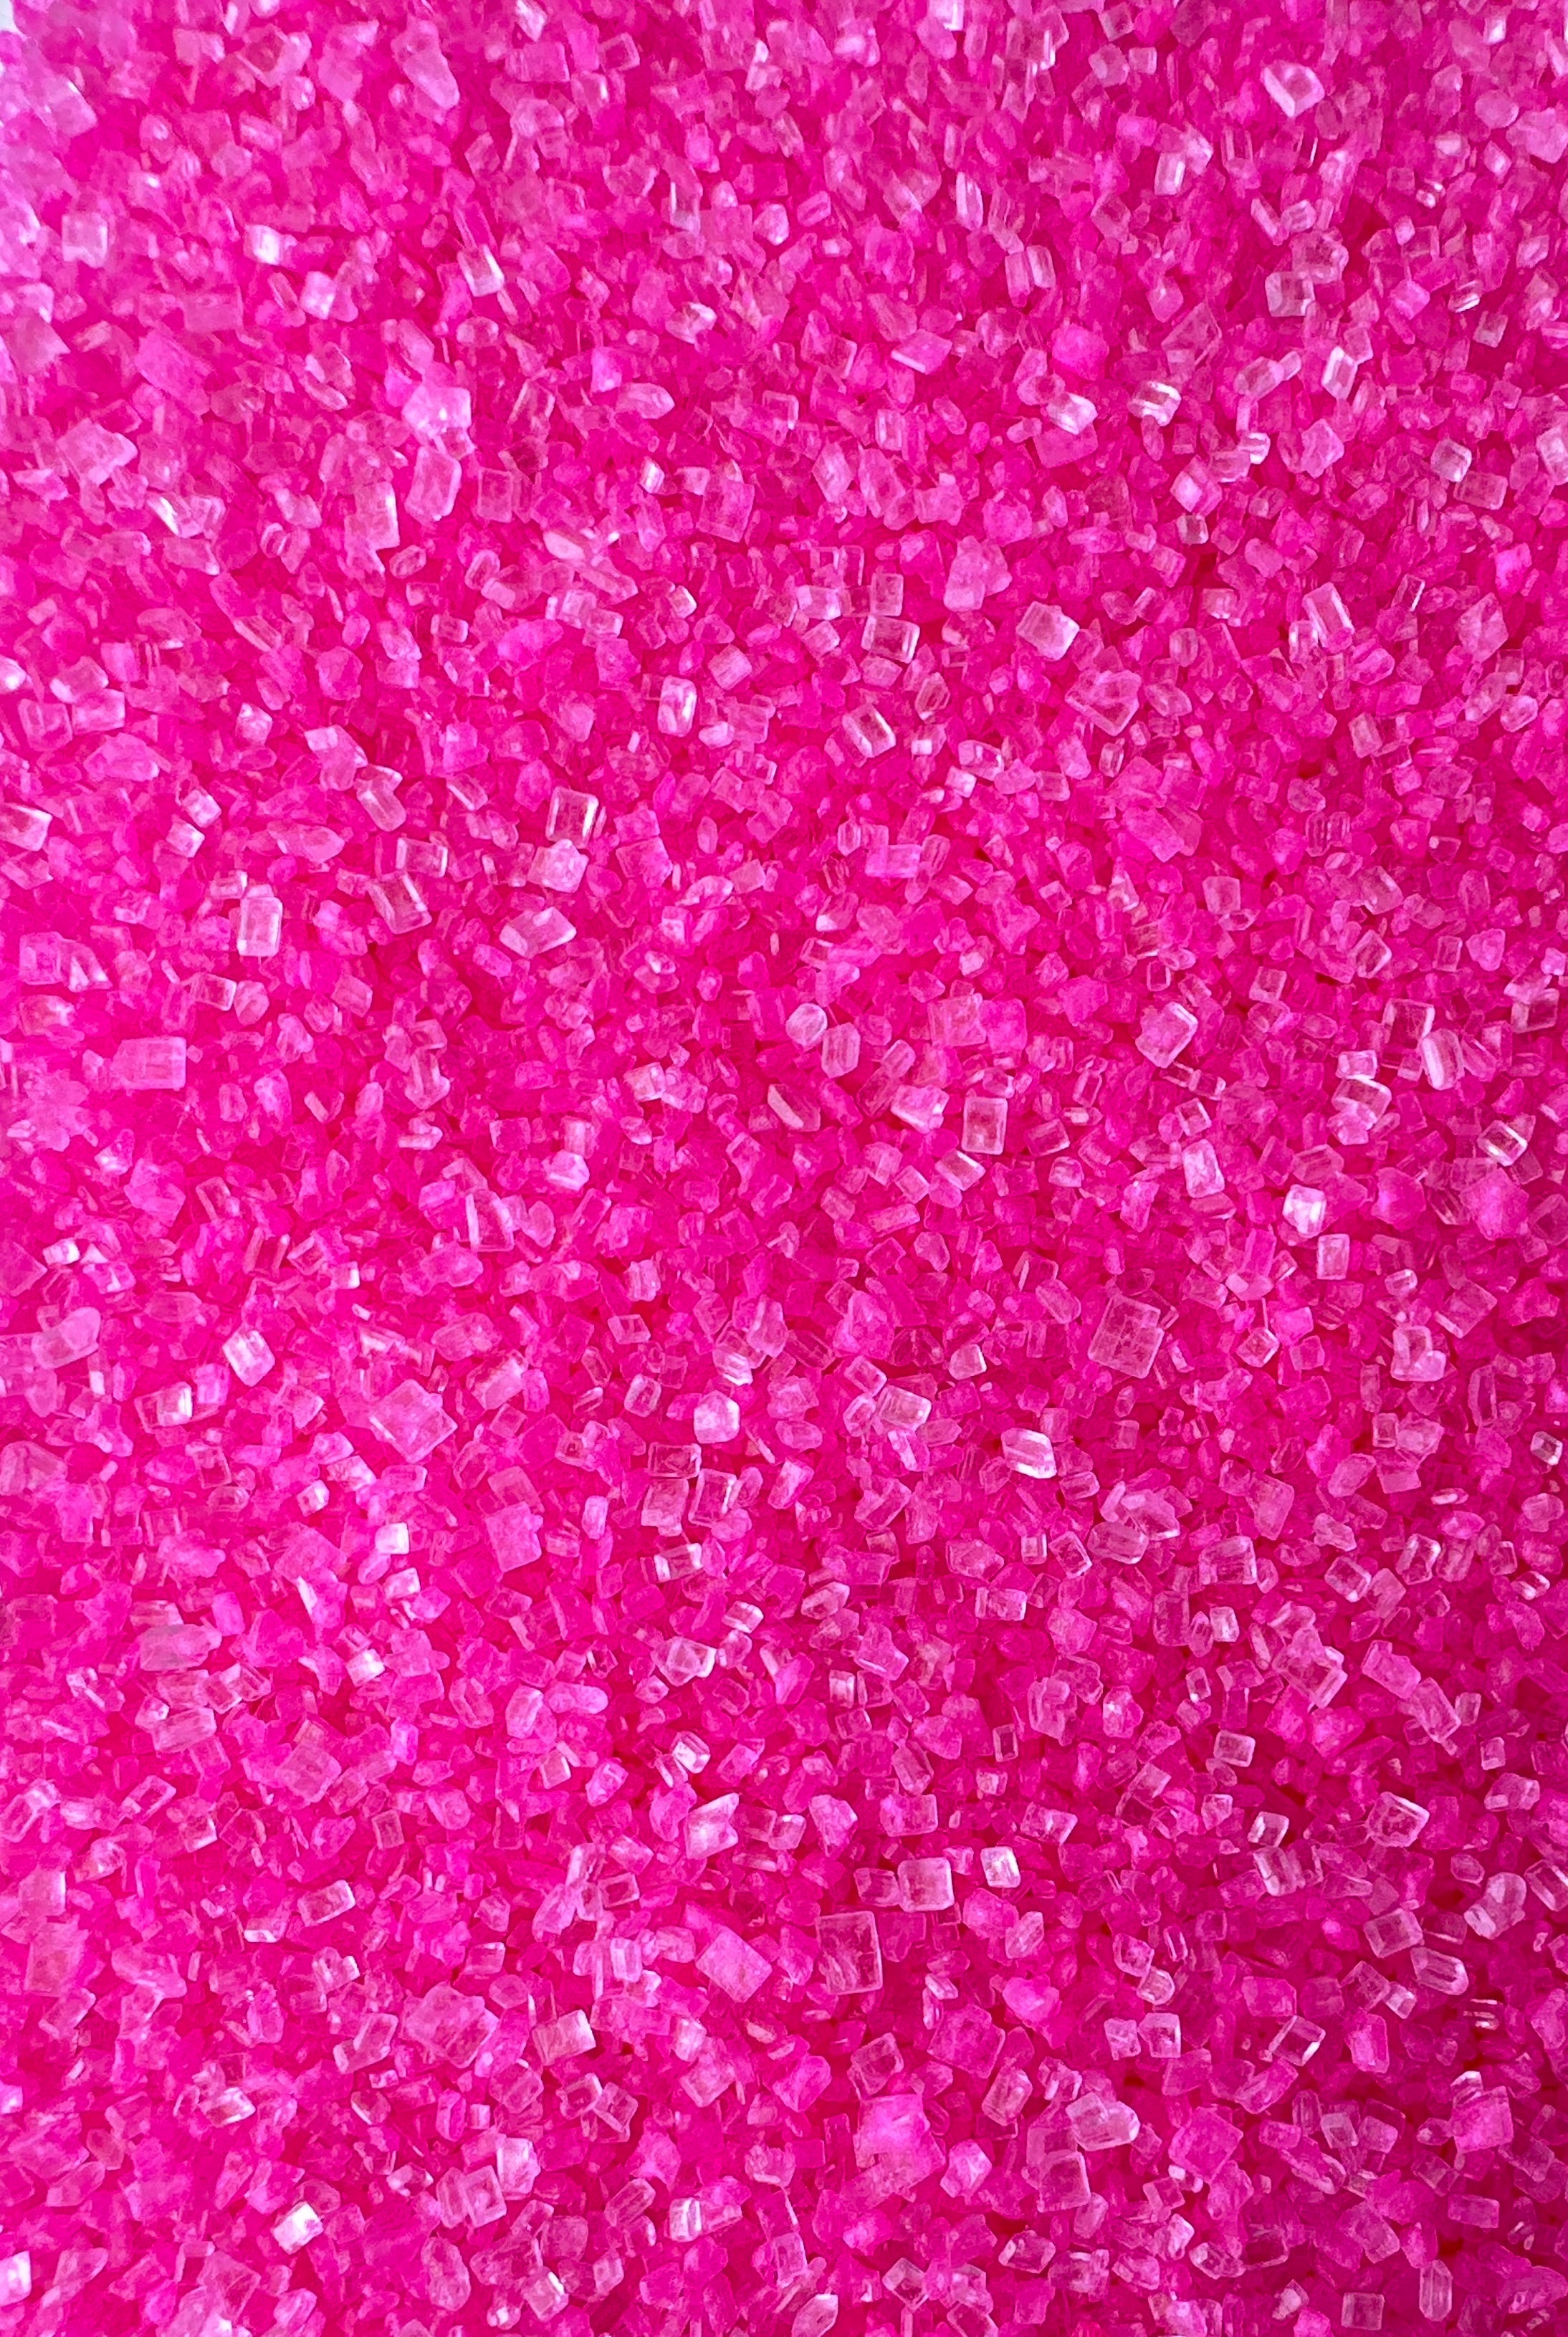 Pink Coarse Sugar - US